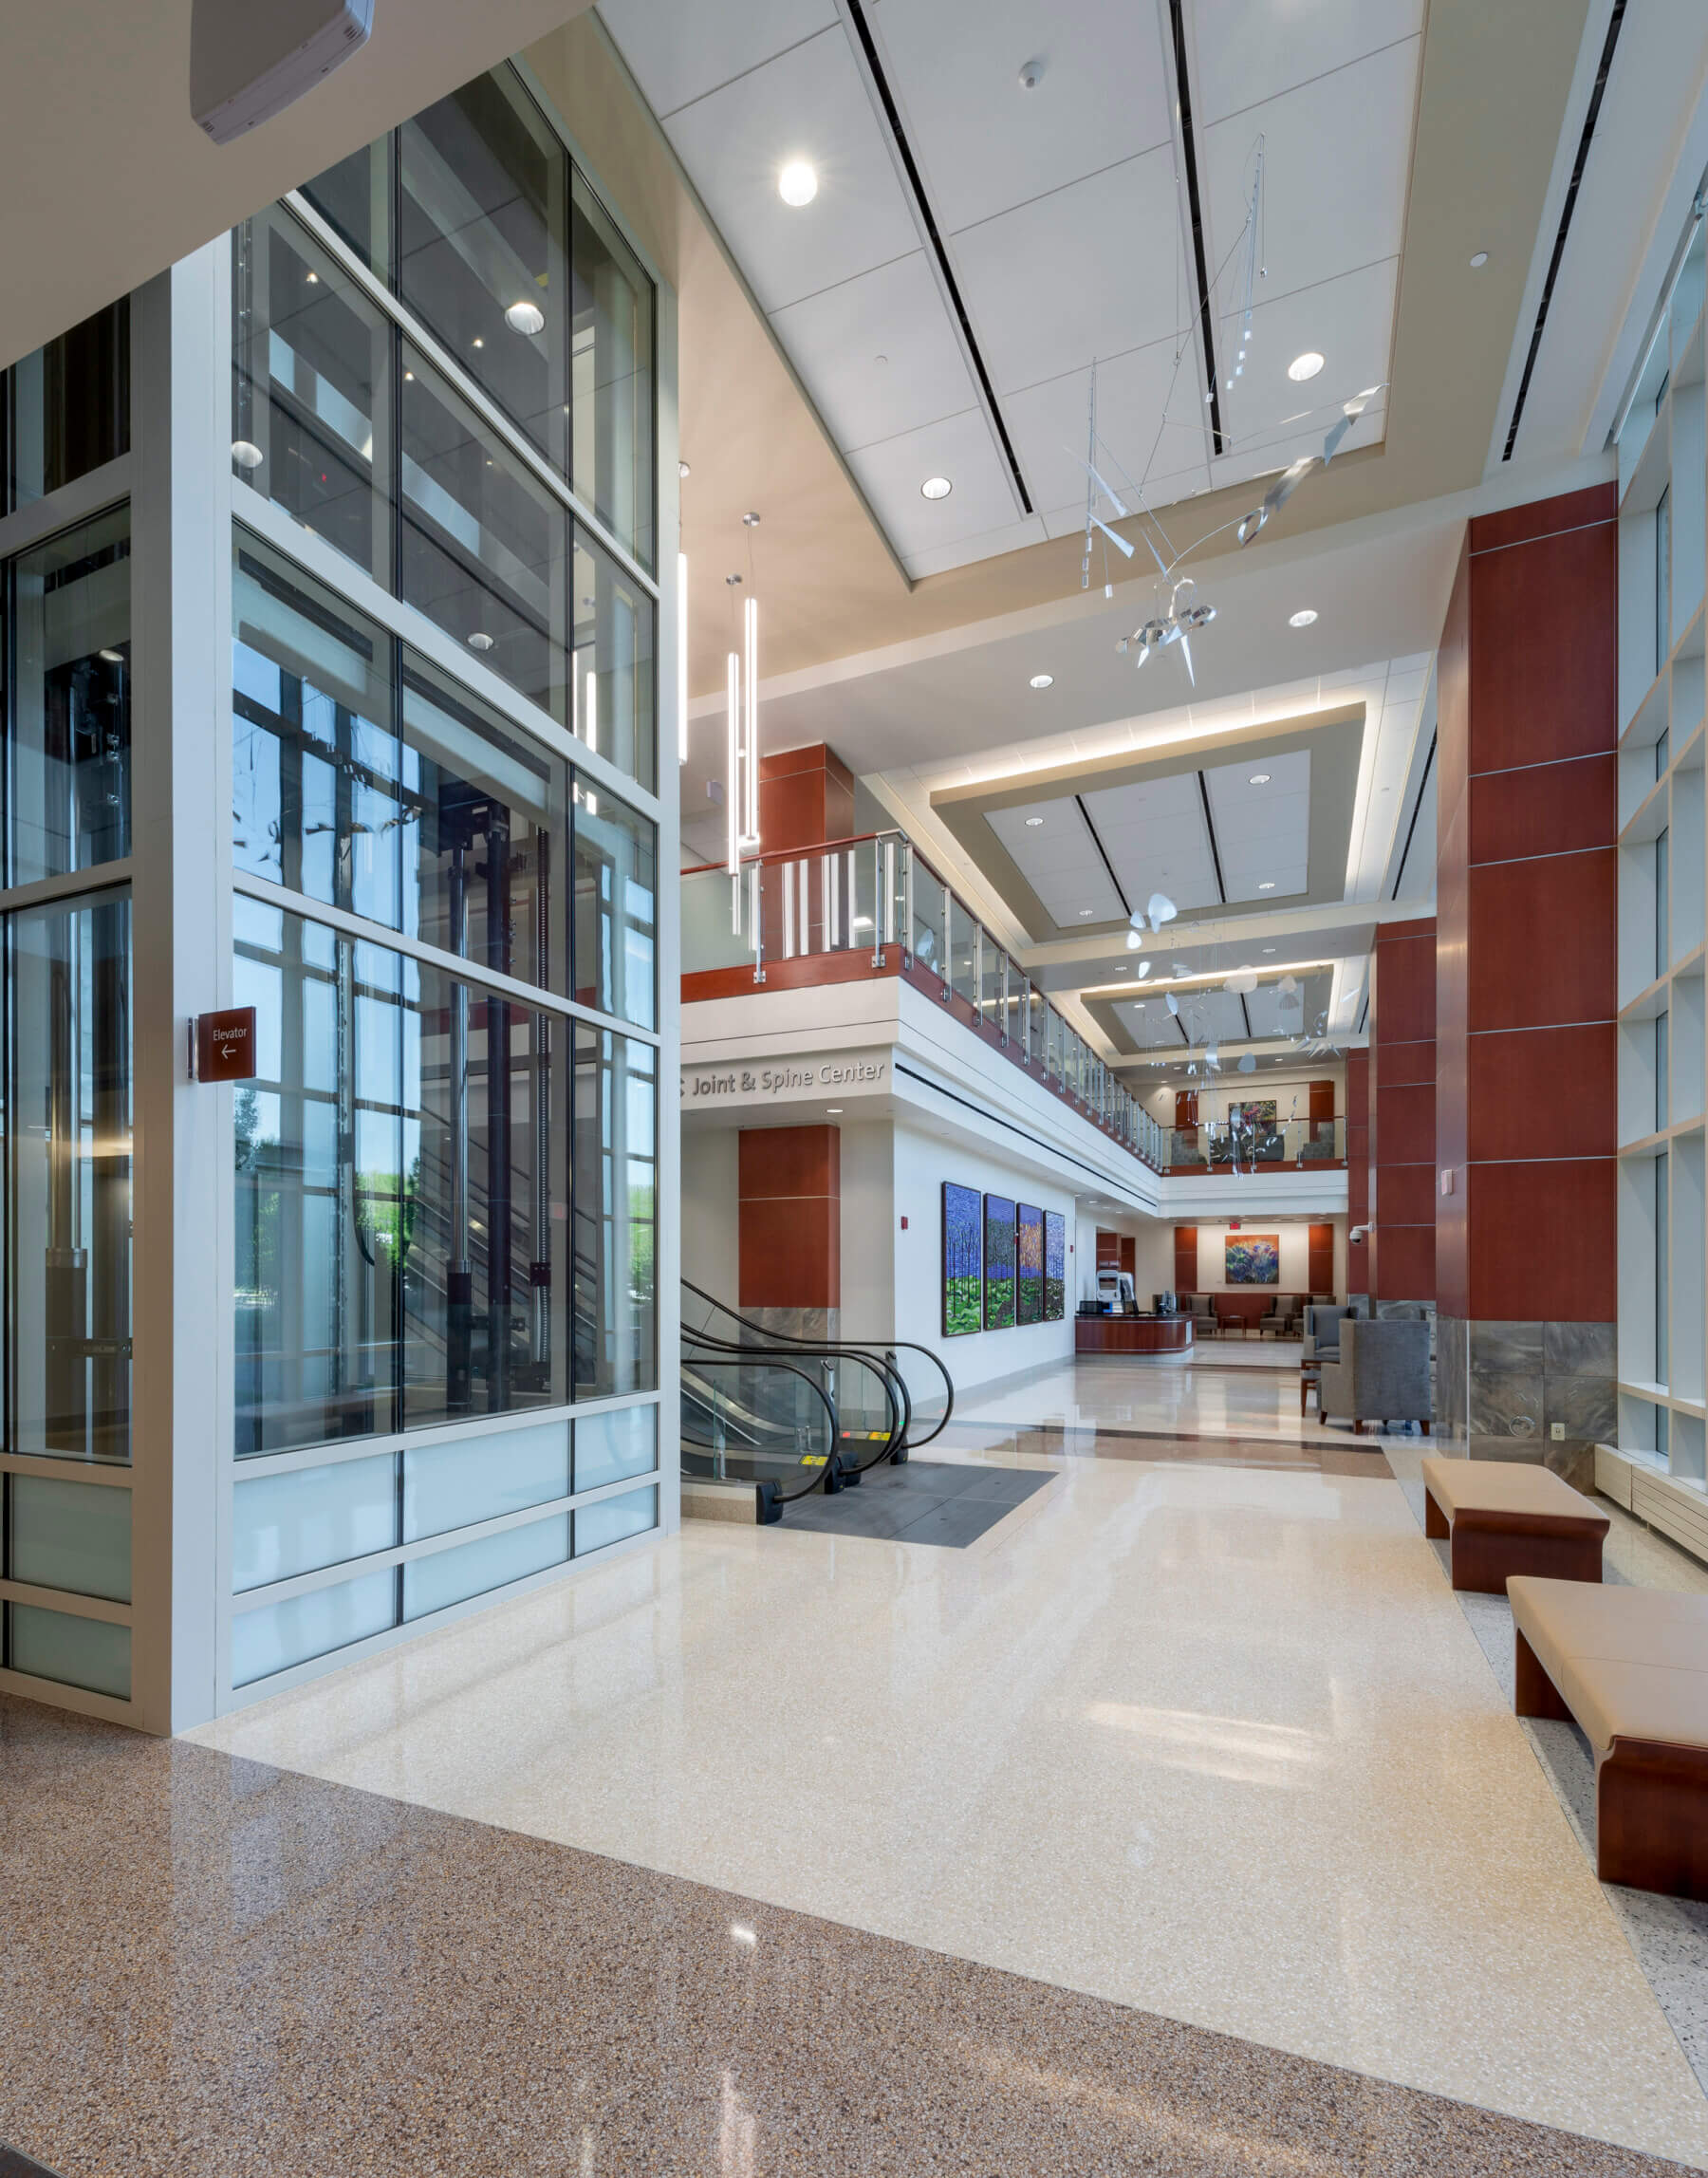 main lobby inside the orthopedic center addition